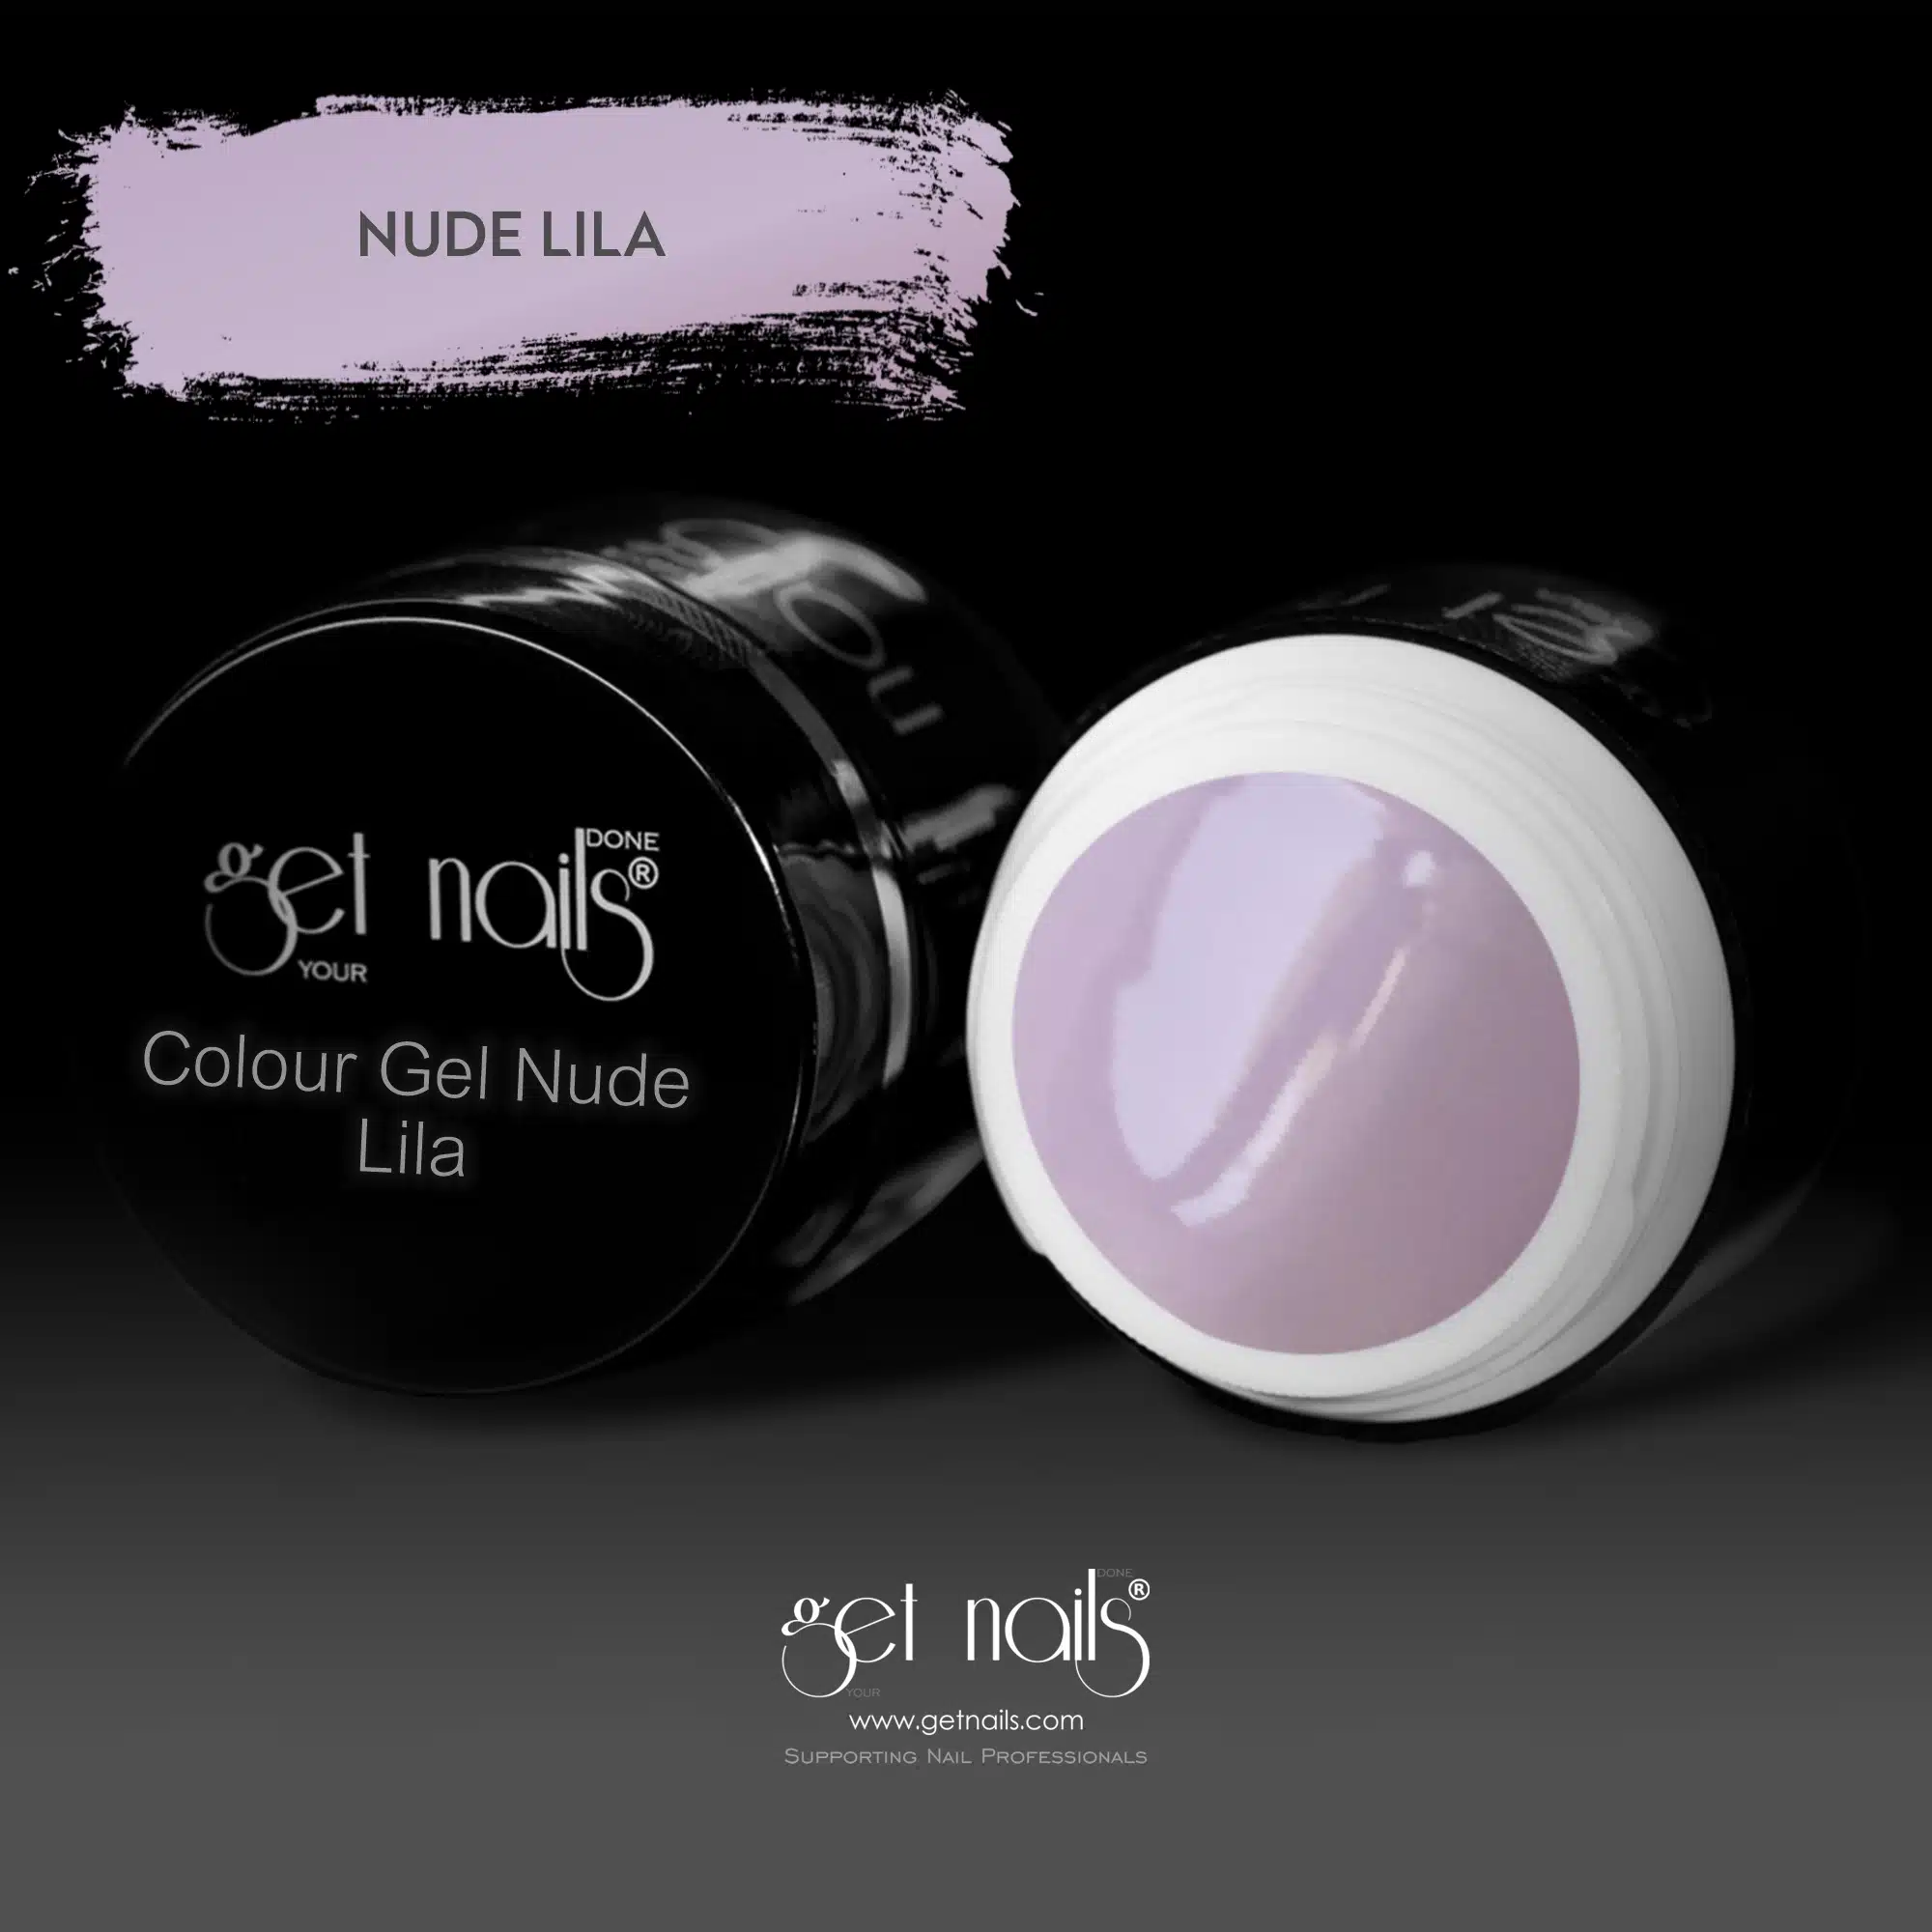 Get Nails Austria - Colour Gel Nude Lila 5g